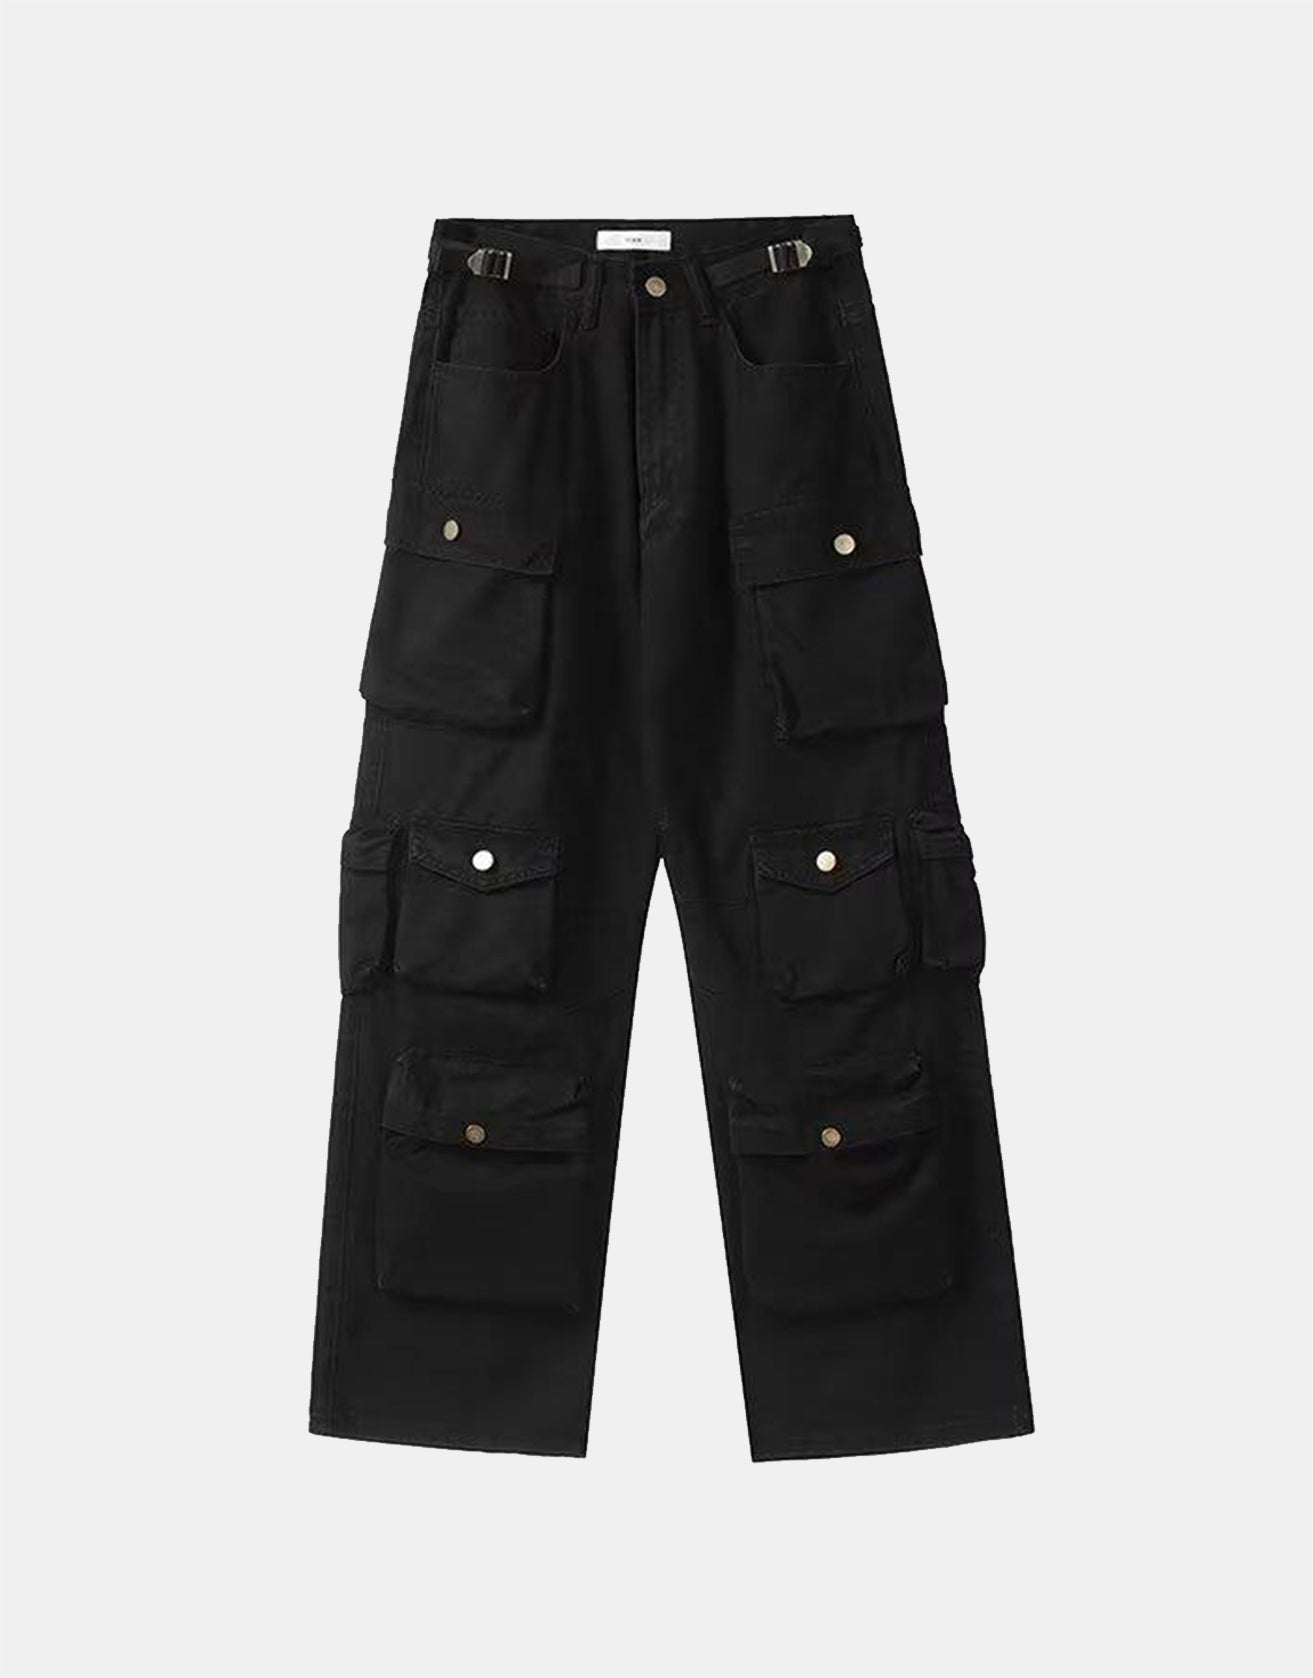 Multi-pocket Street Style Cargo Pants